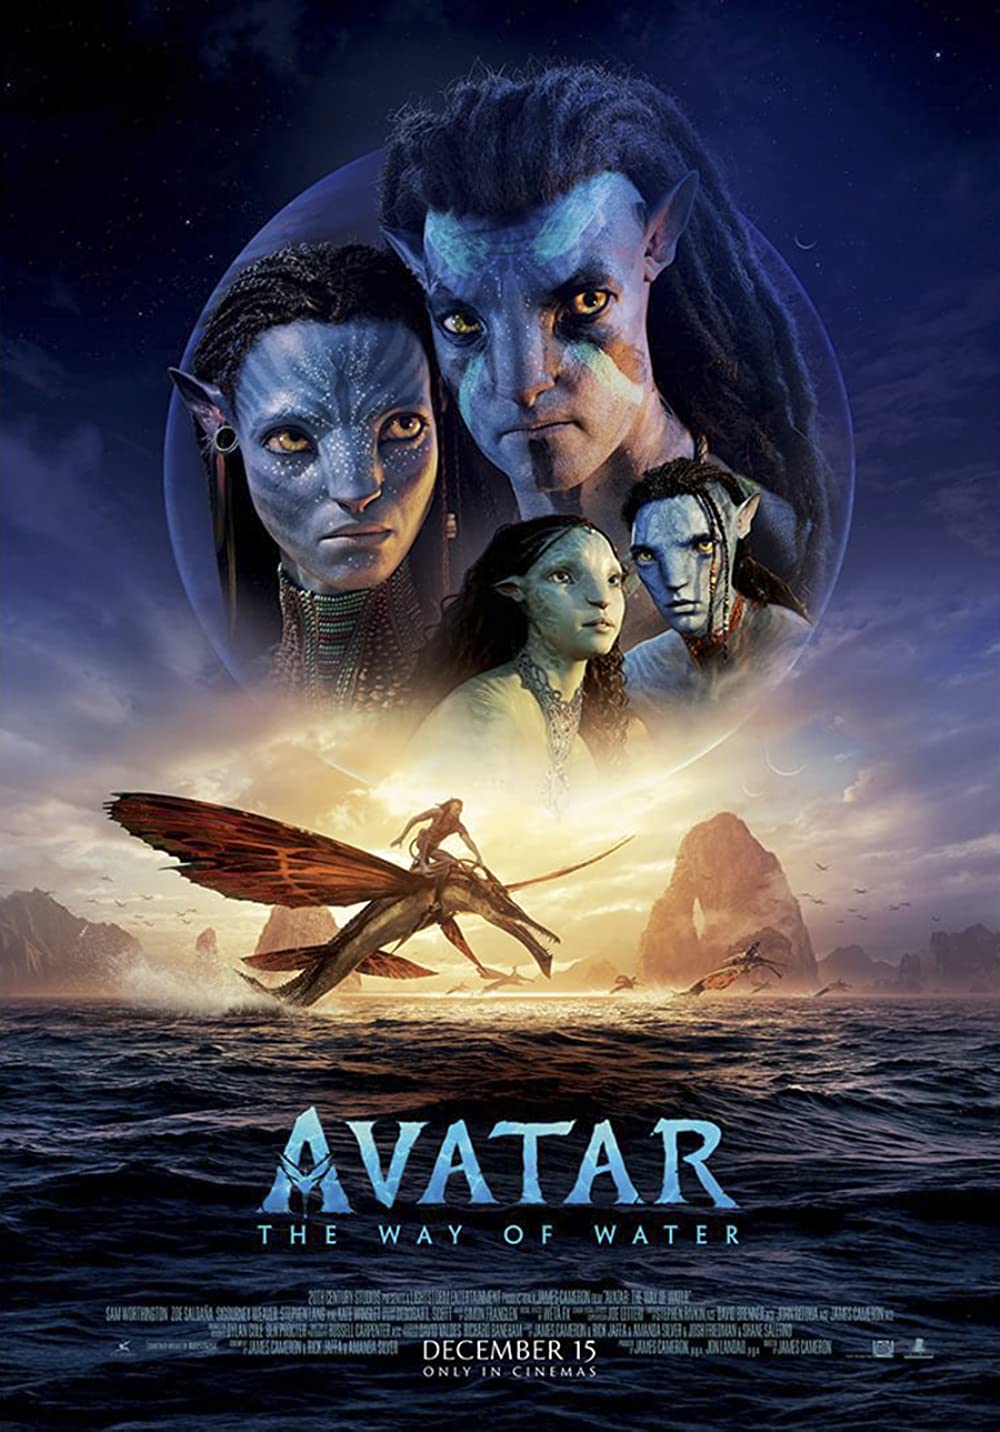 Stiahni si Filmy DVD Avatar: Cesta vody / Avatar: The Way of Water (2022)(CZ/EN)(DVD9) = CSFD 81%